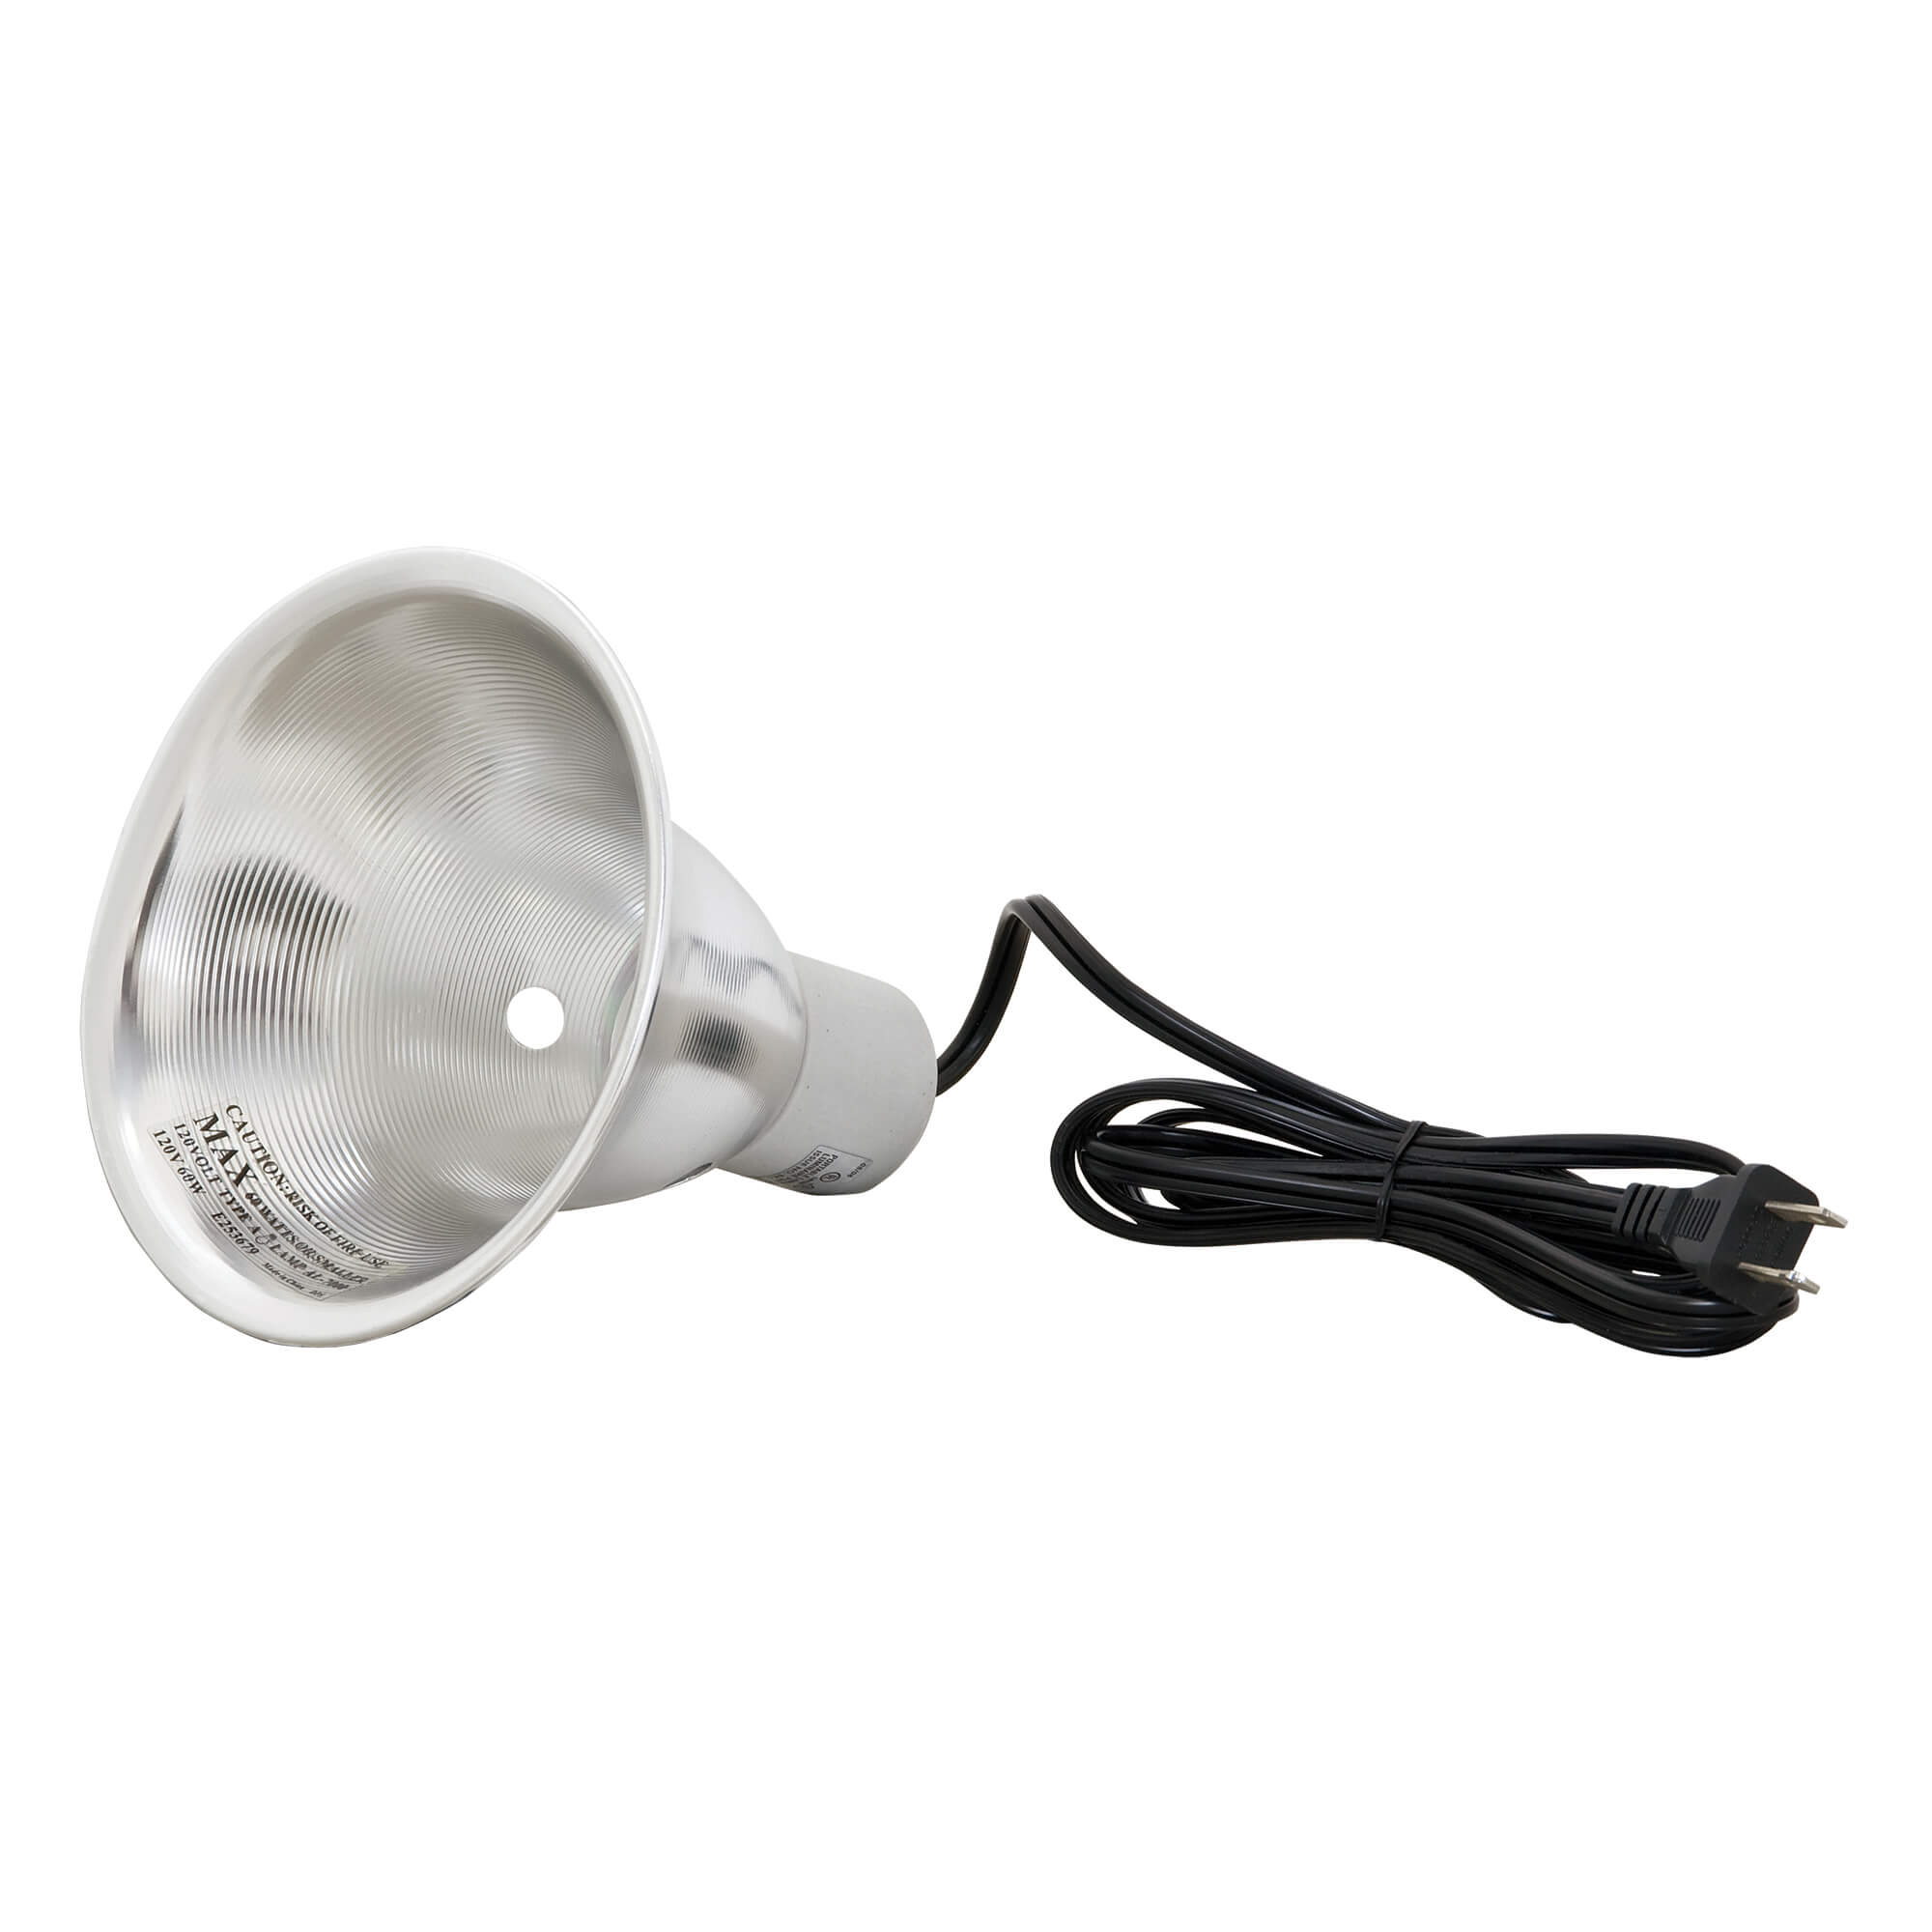 Zilla Premium Reflector Dome Light and Heat 5.5"